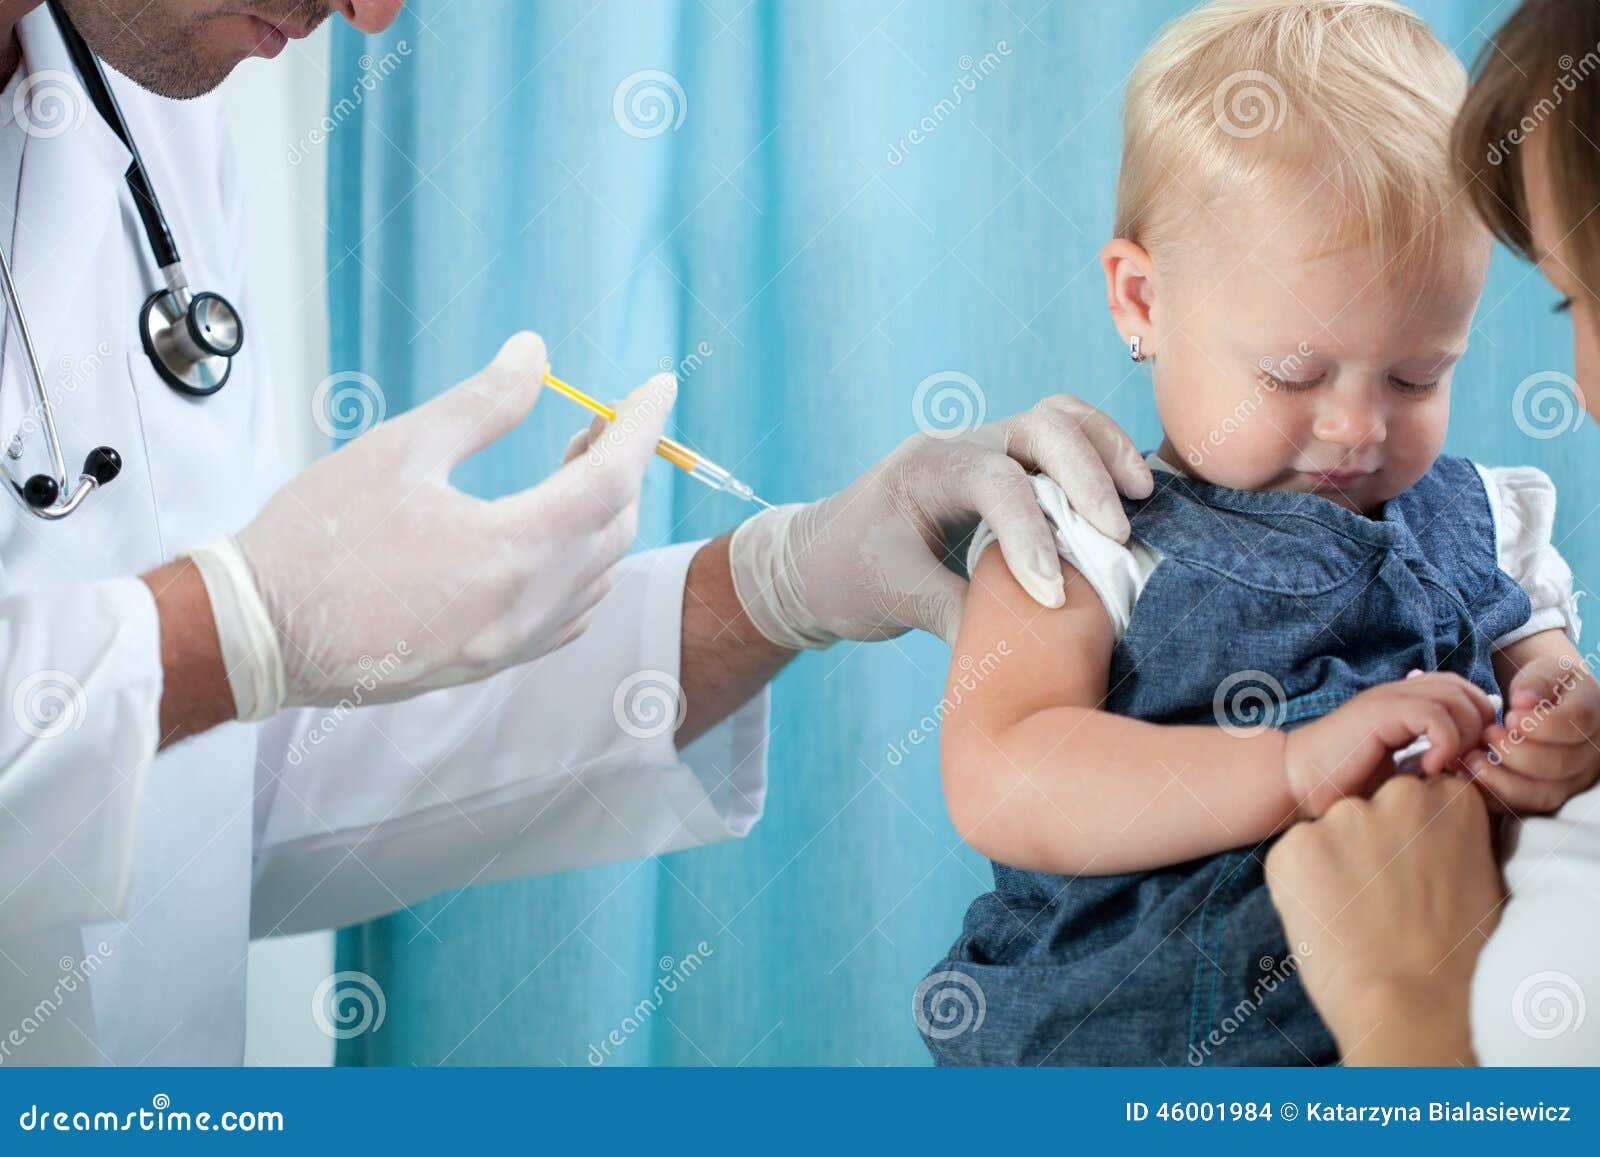 child vaccination